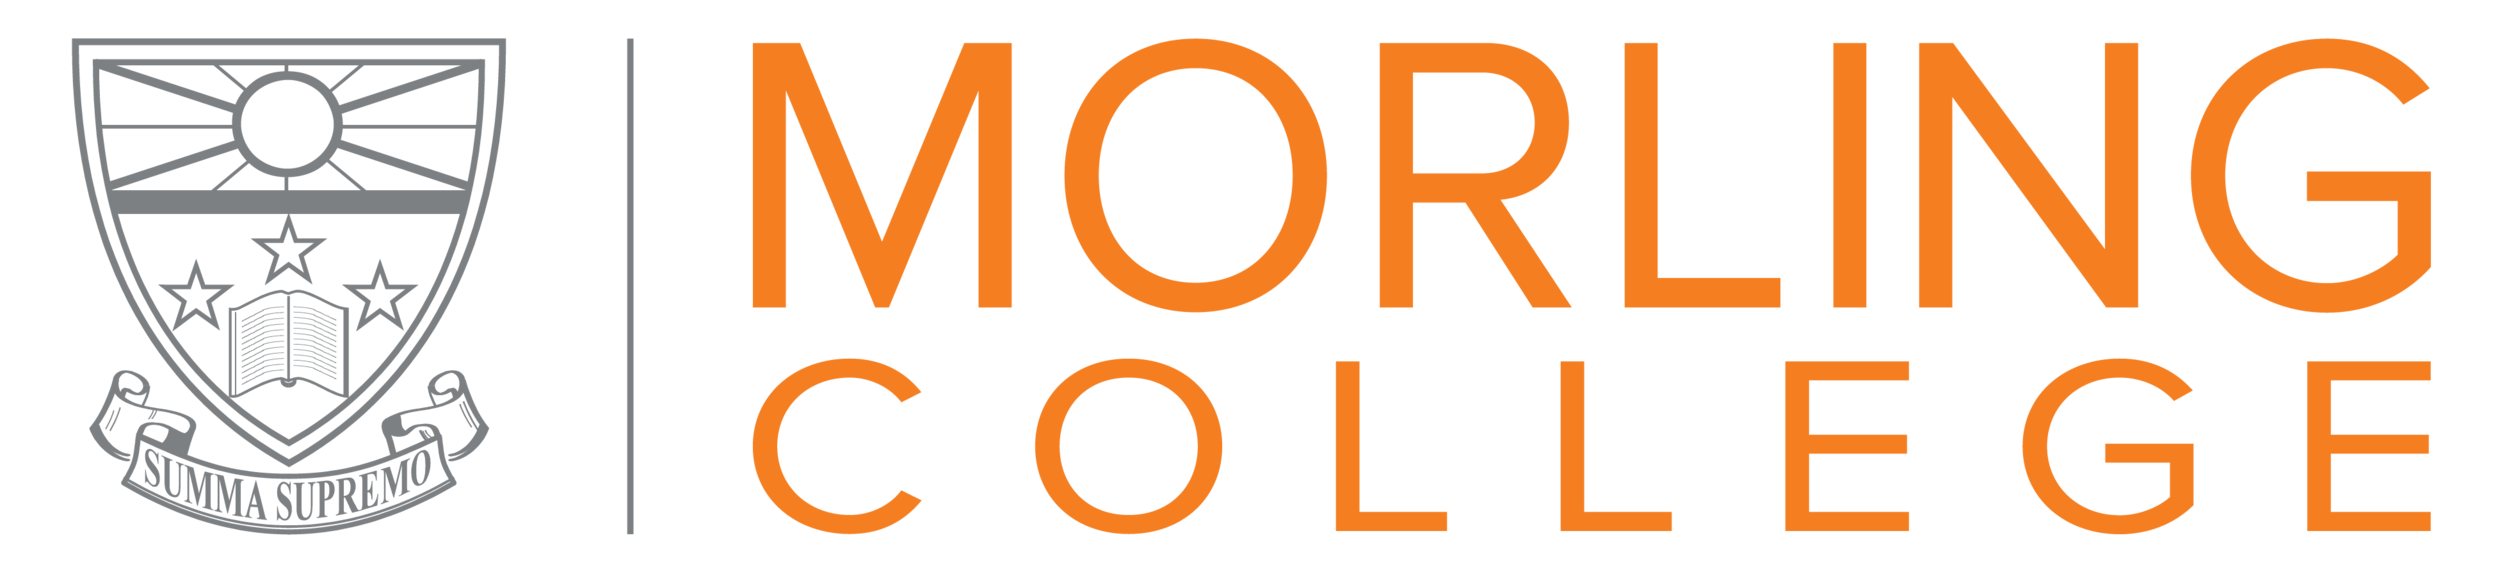 morling-logo.png